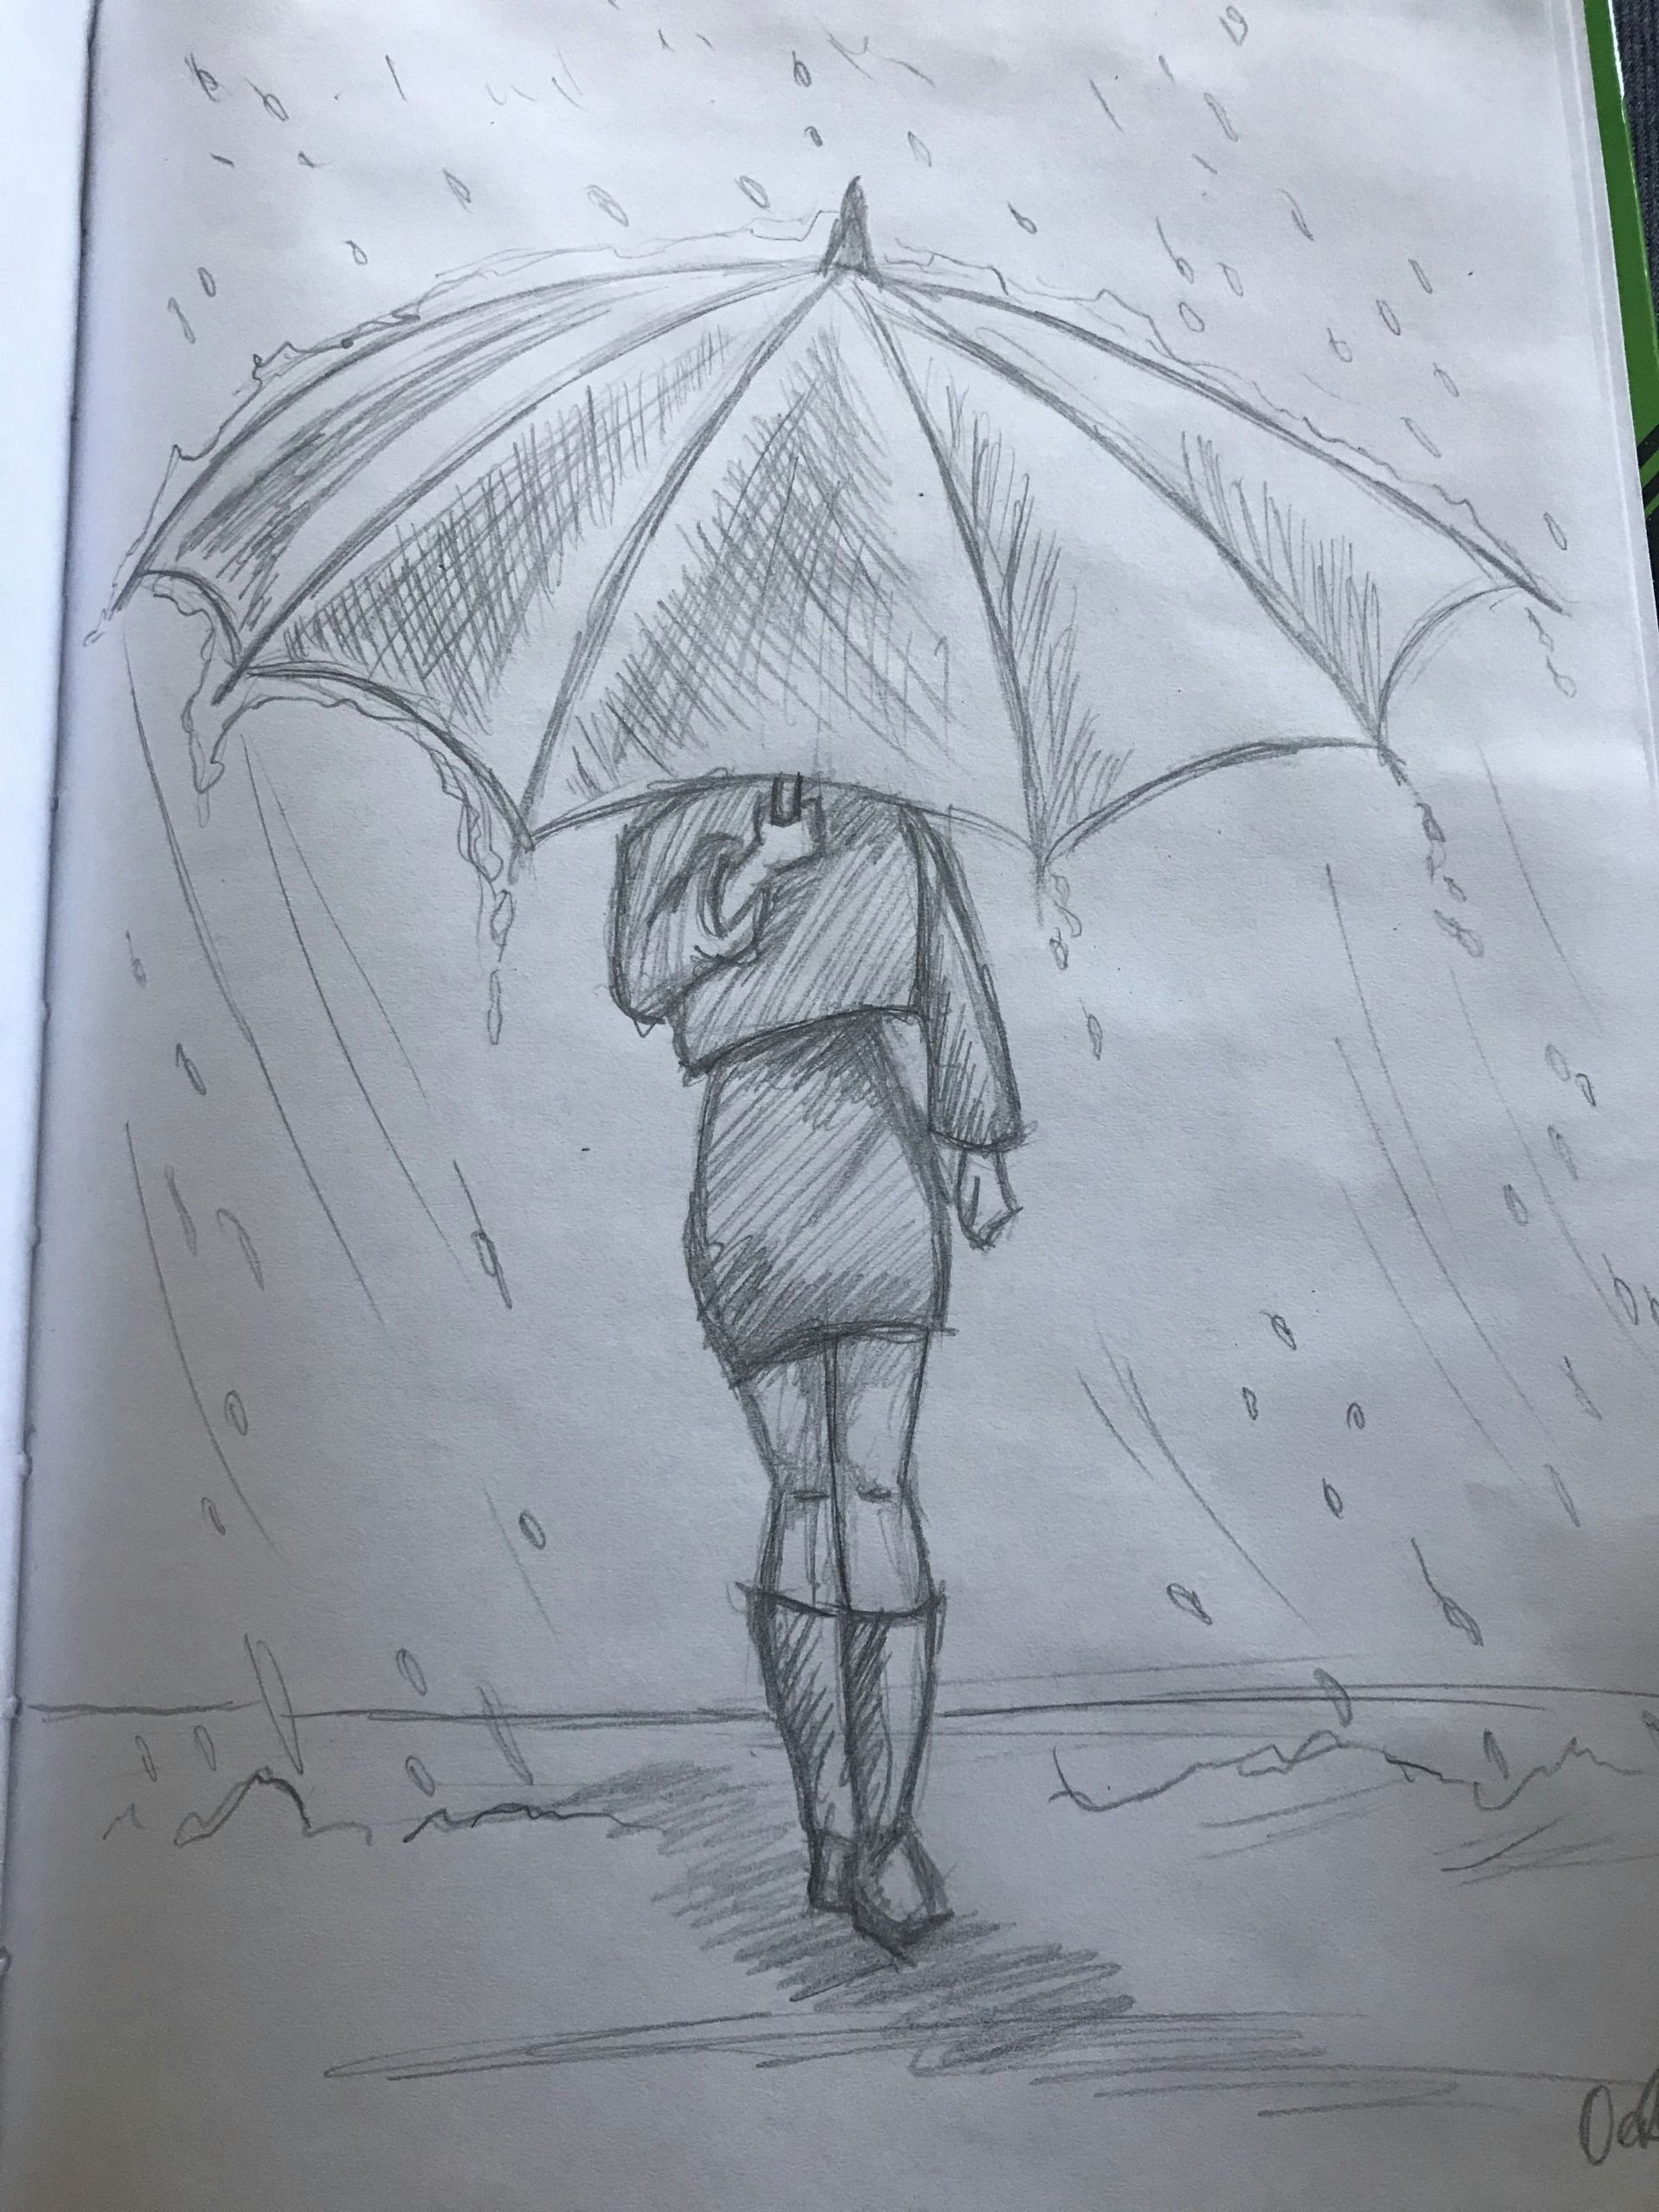 Easy Umbrella Drawing Pin by Tatjana Preua On Katze Zeichnen In 2019 Pencil Art